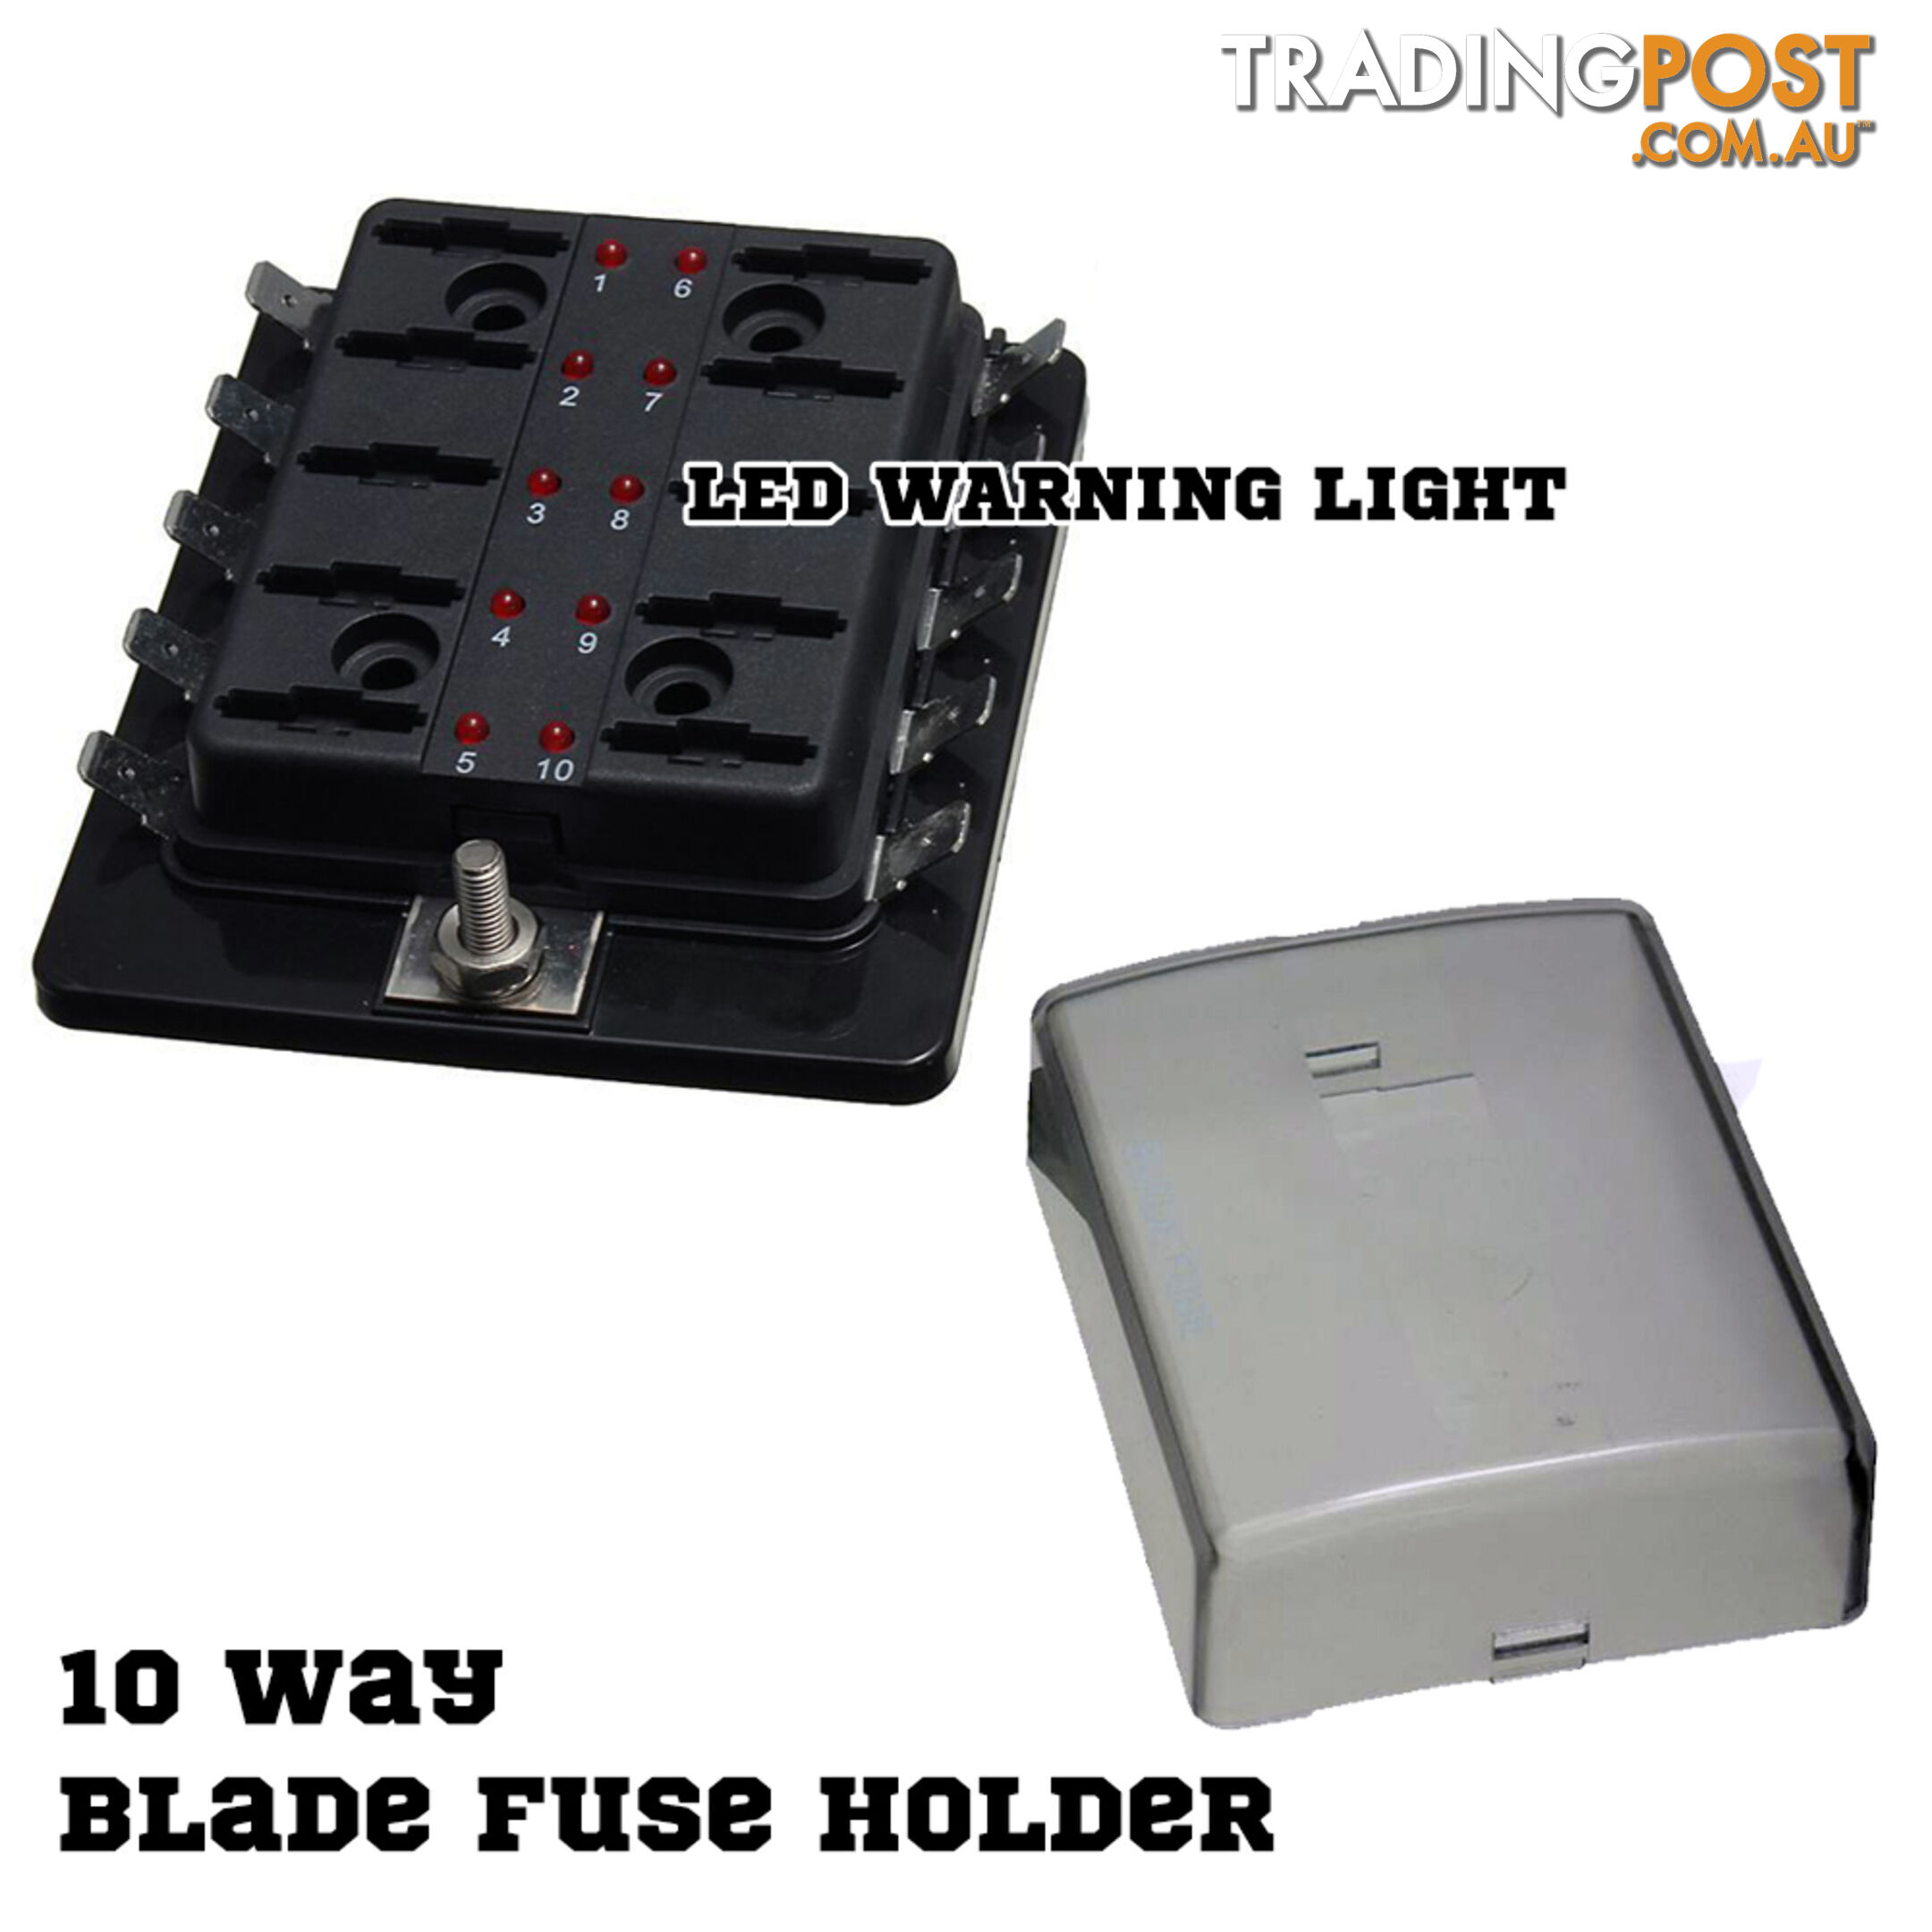 ATO 10 Way Blade Fuse Holder Box LED Light 12-32V Circuit Caravan Truck Car 4X4